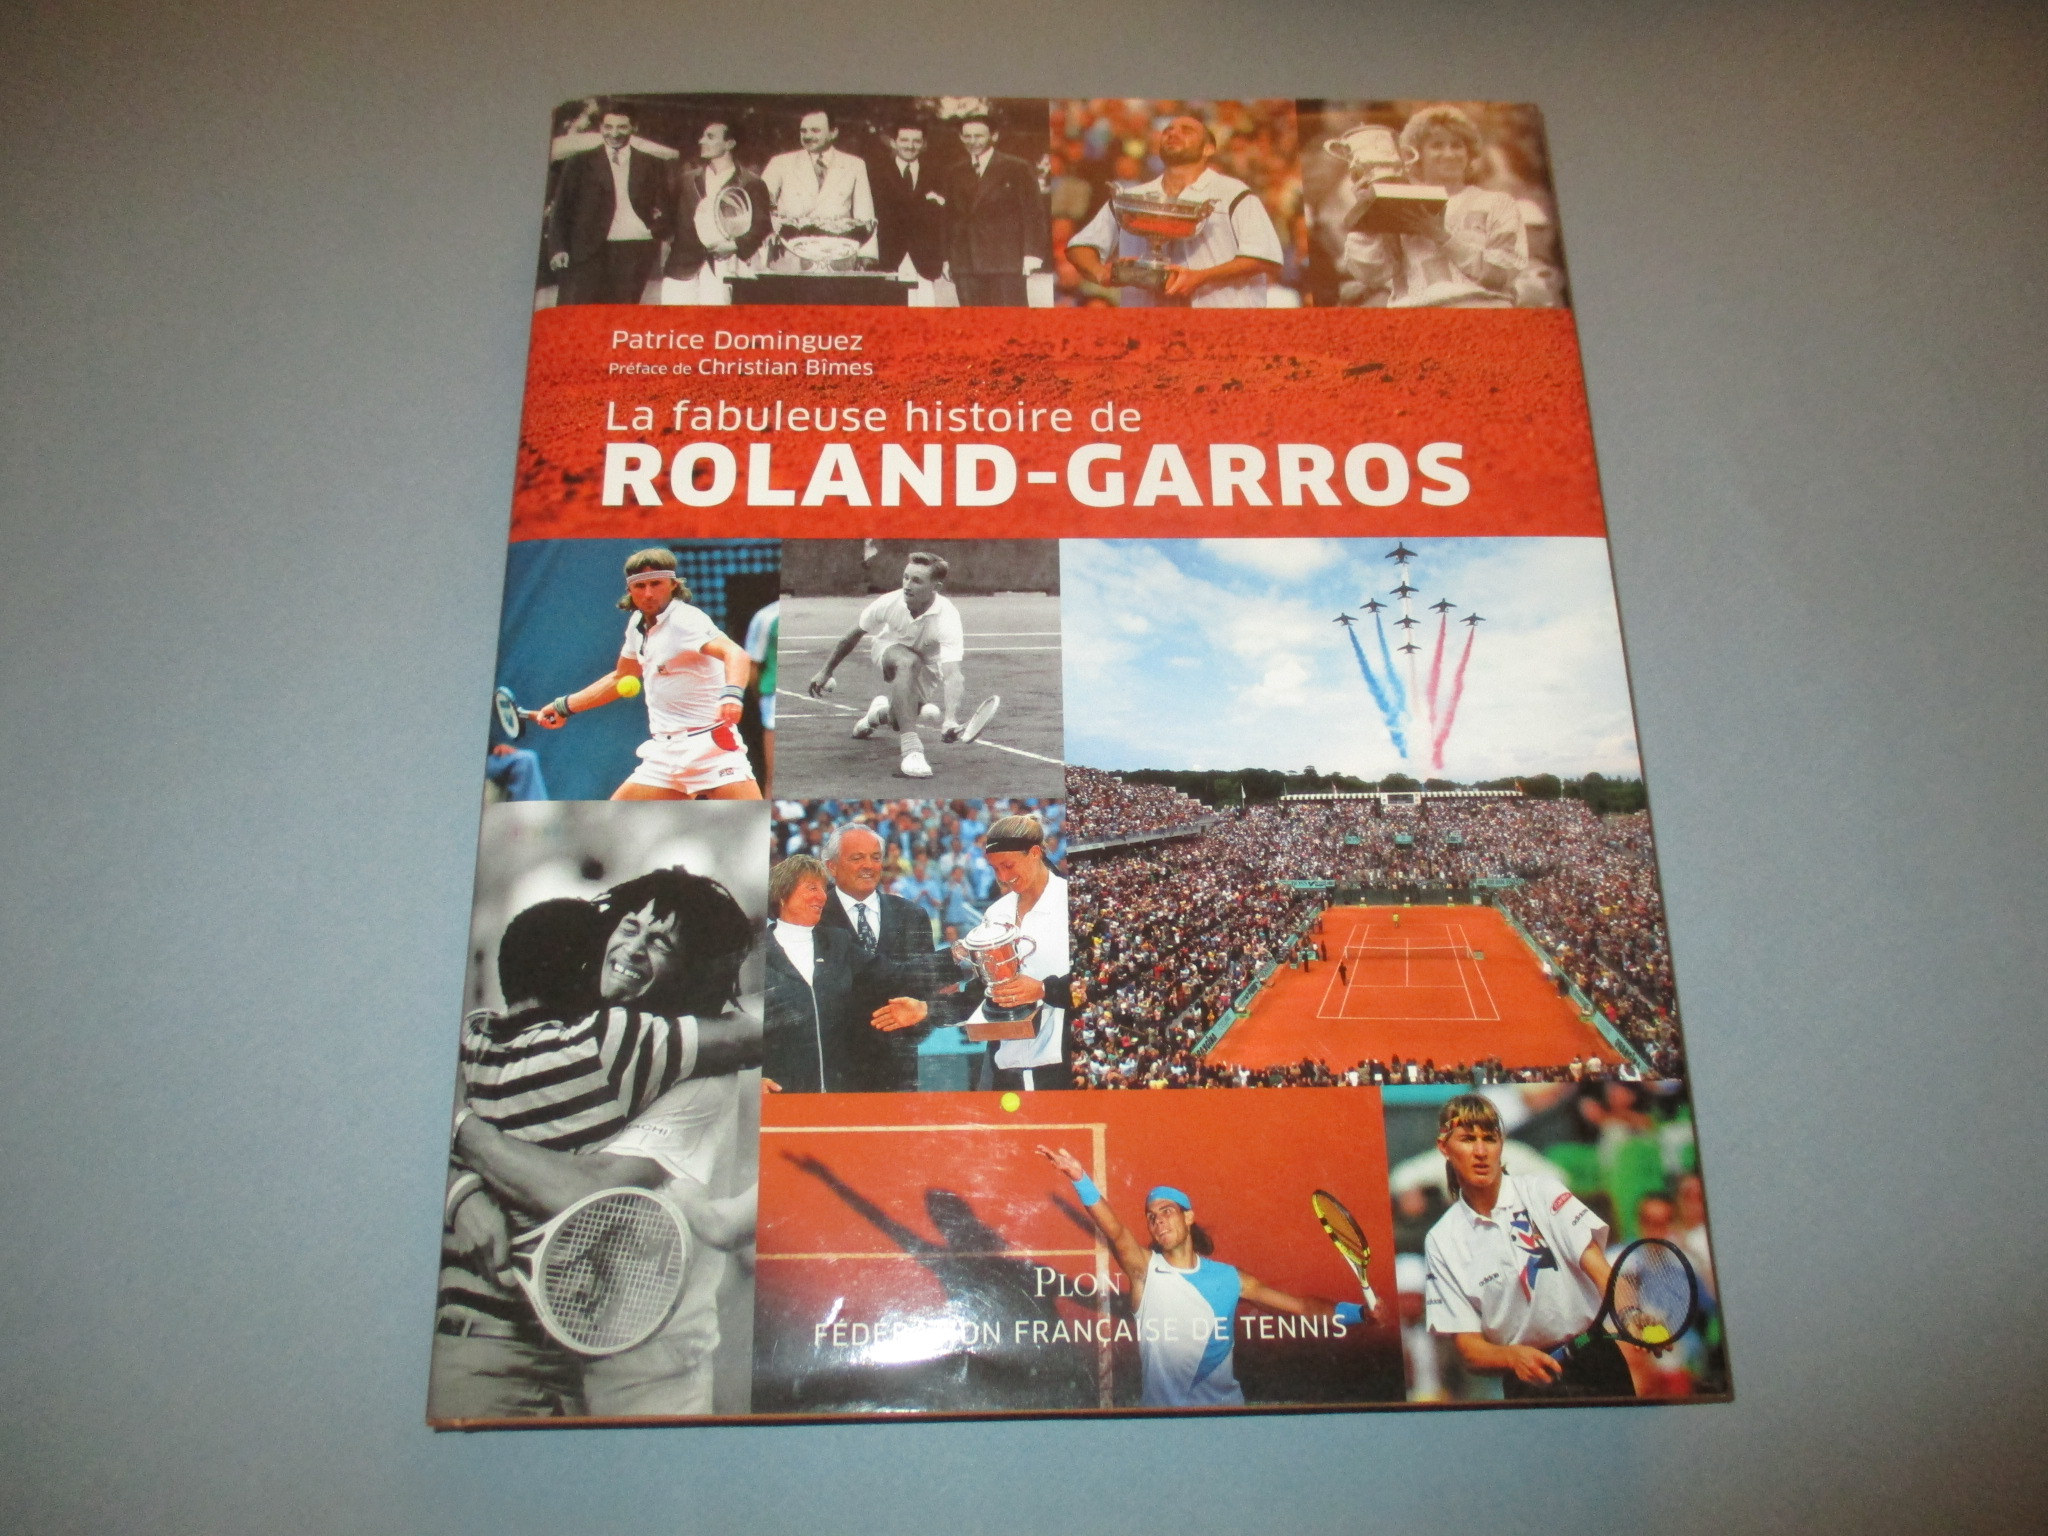 La fabuleuse histoire de Roland-Garros, Tennis, Patrice Dominguez, Plon FFT 2008